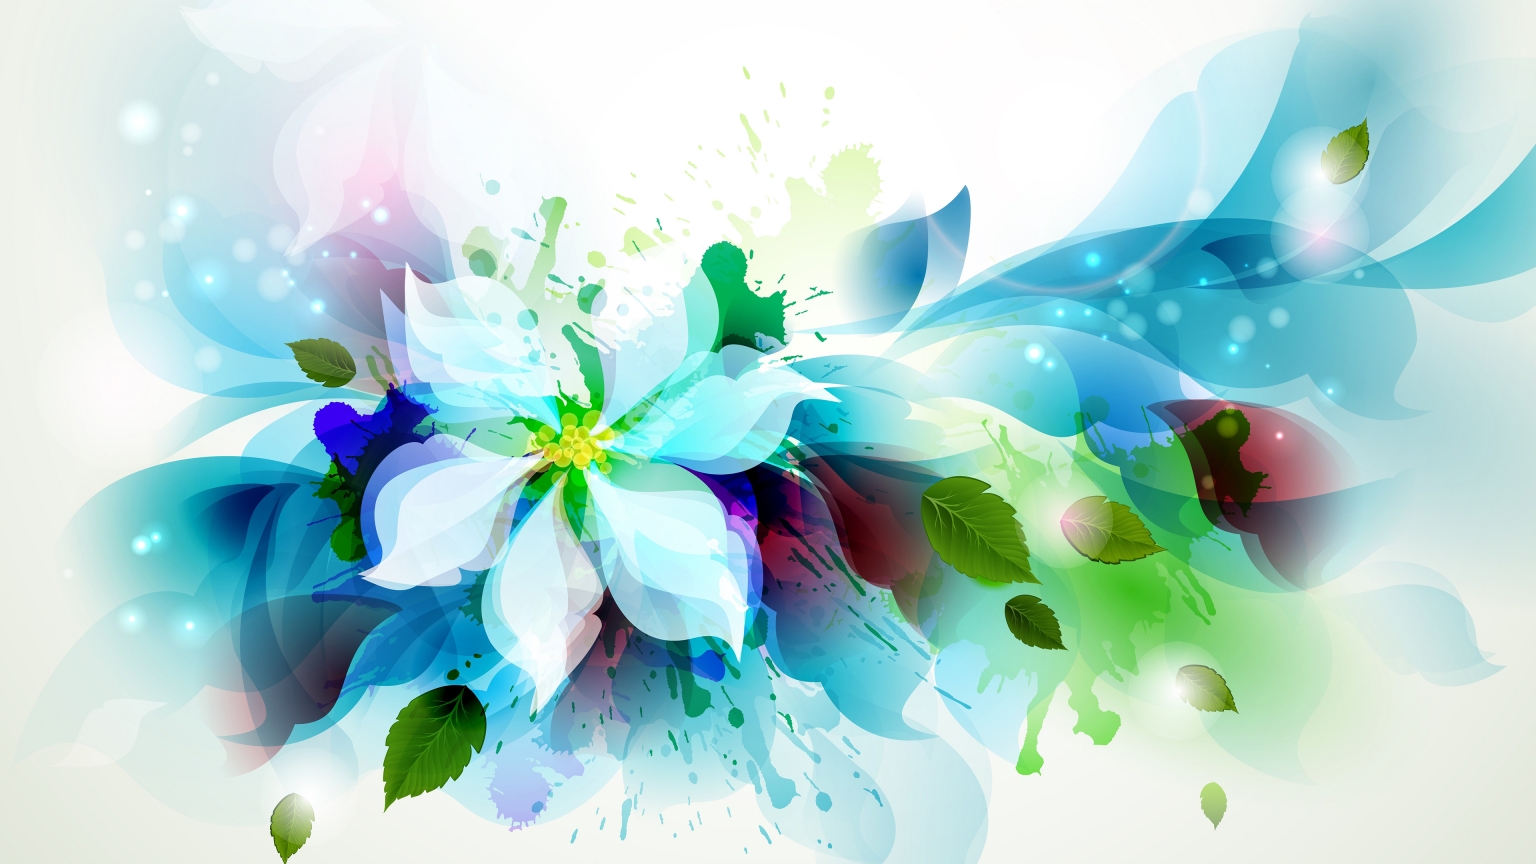 Beautiful Flower Art for 1536 x 864 HDTV resolution